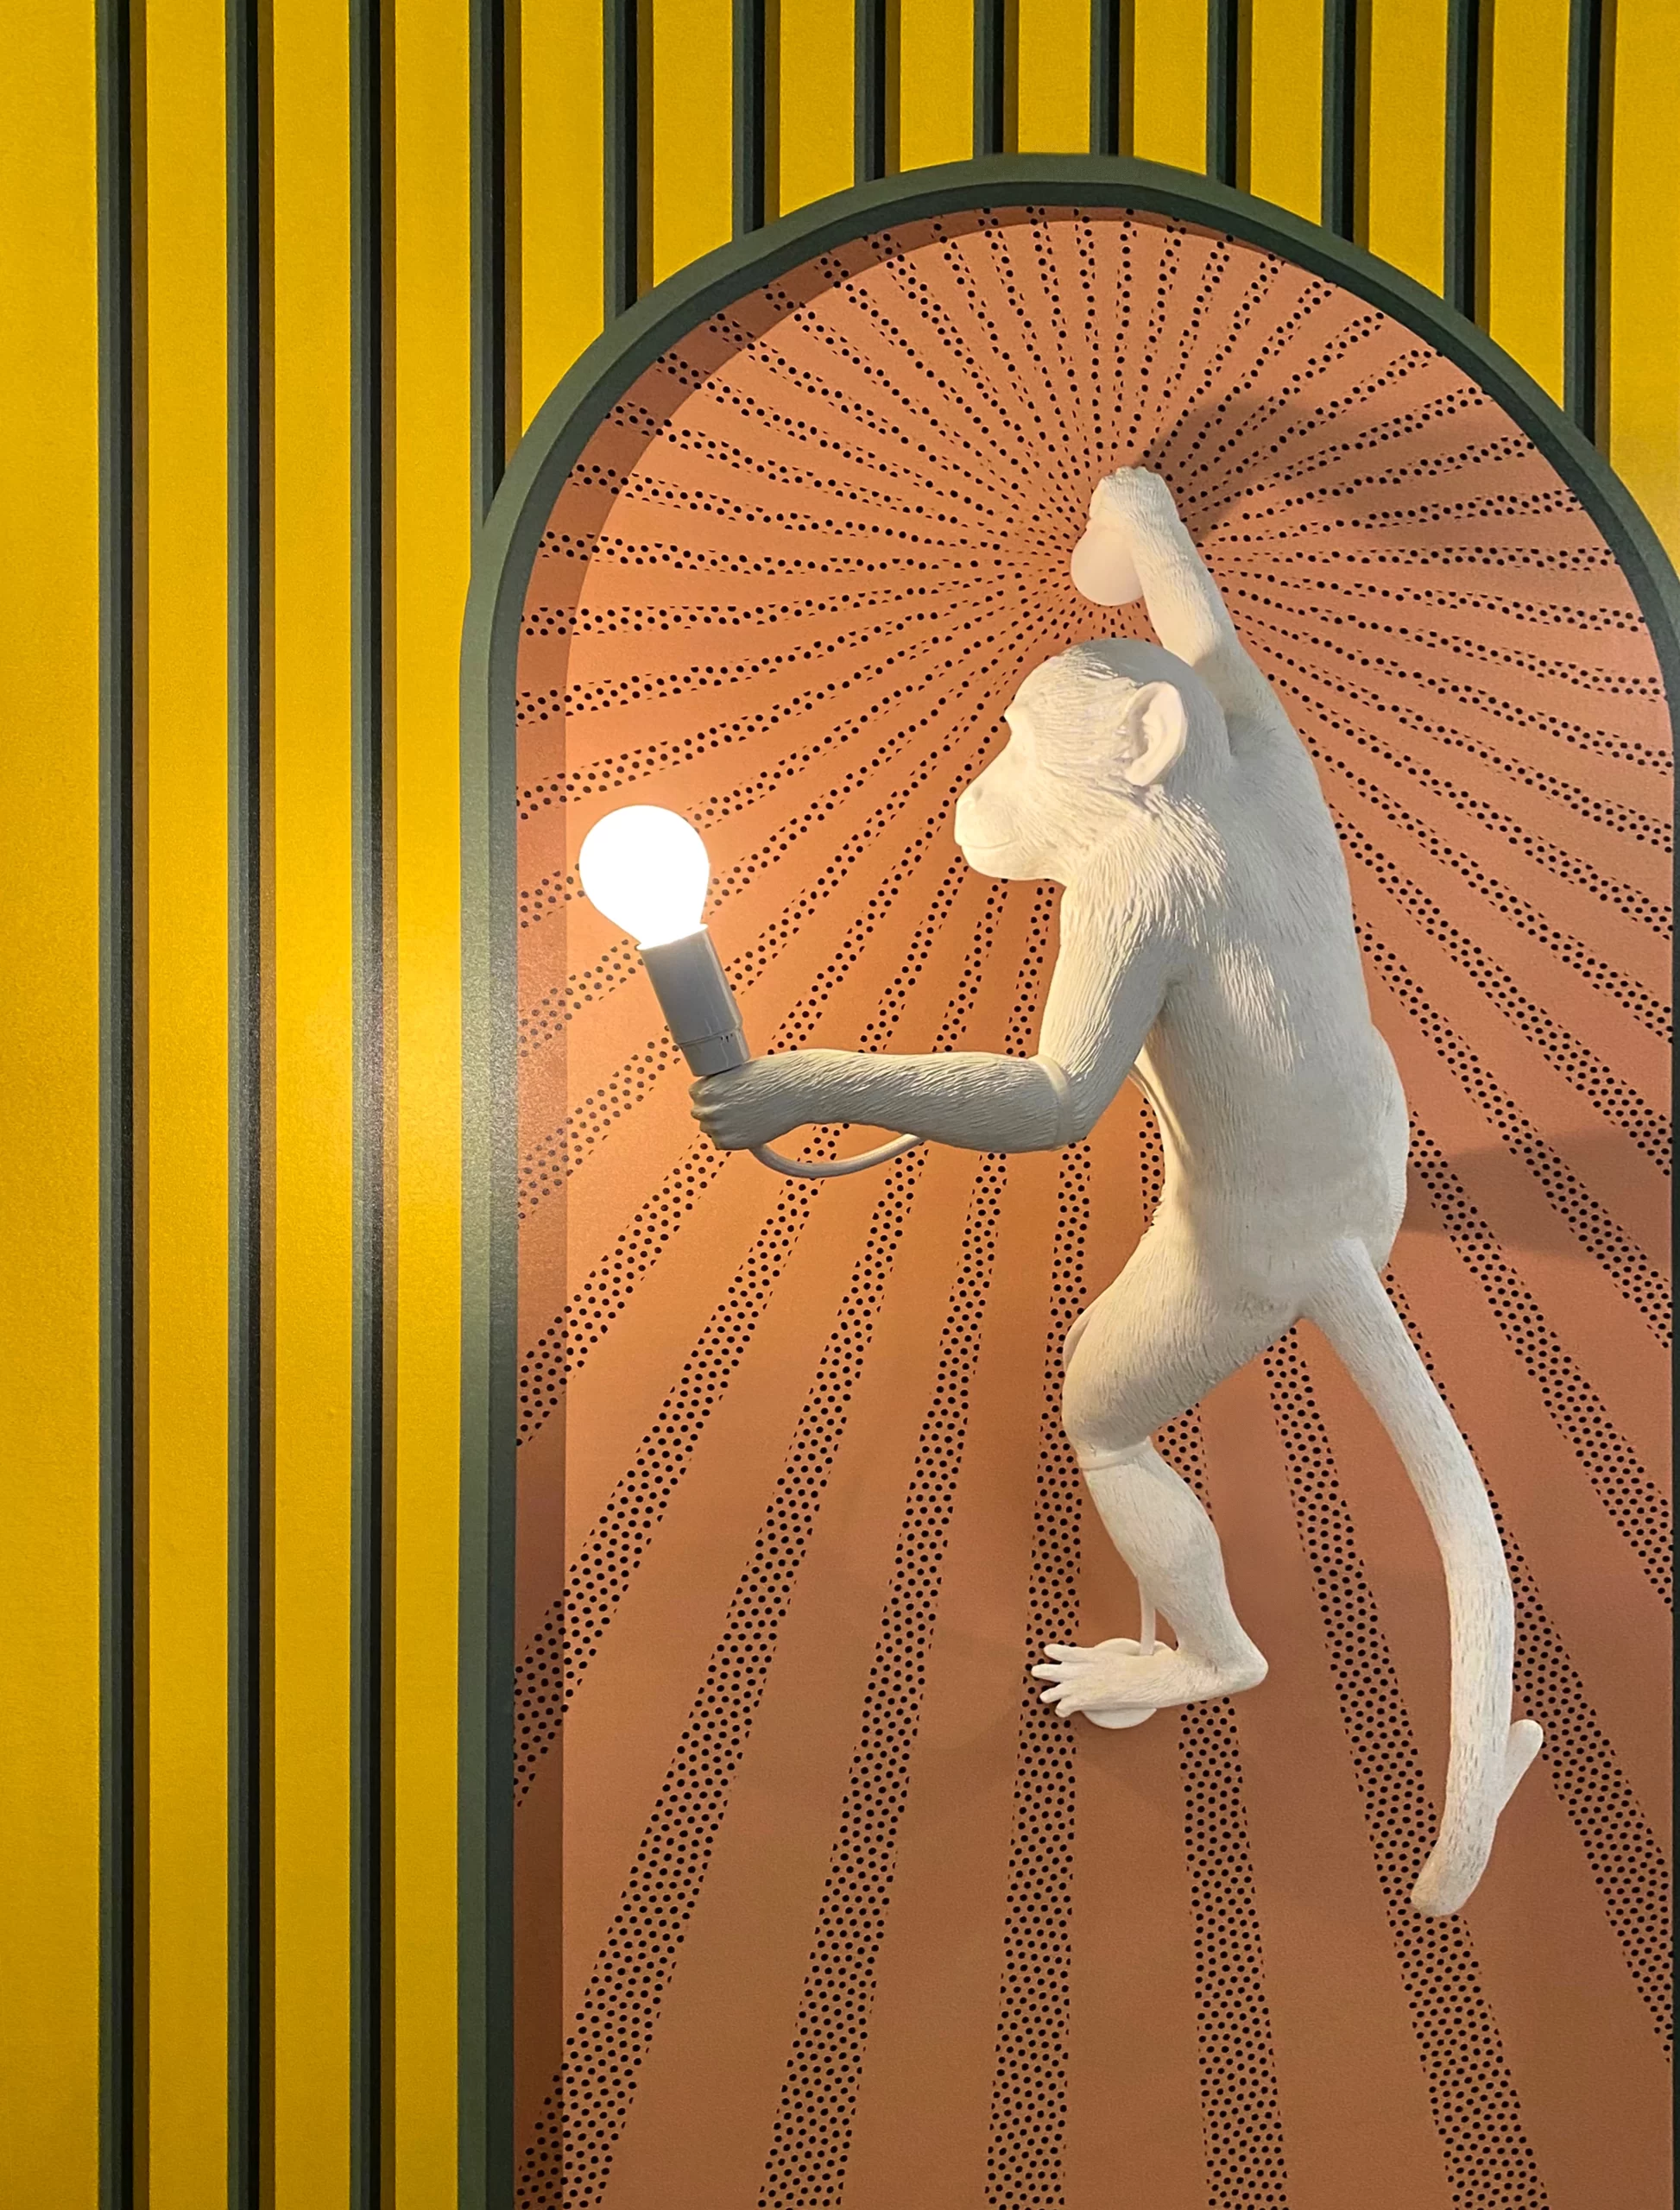 jennifer-griffin-Funky Monkey lamp on pattern wall interior design-unsplash